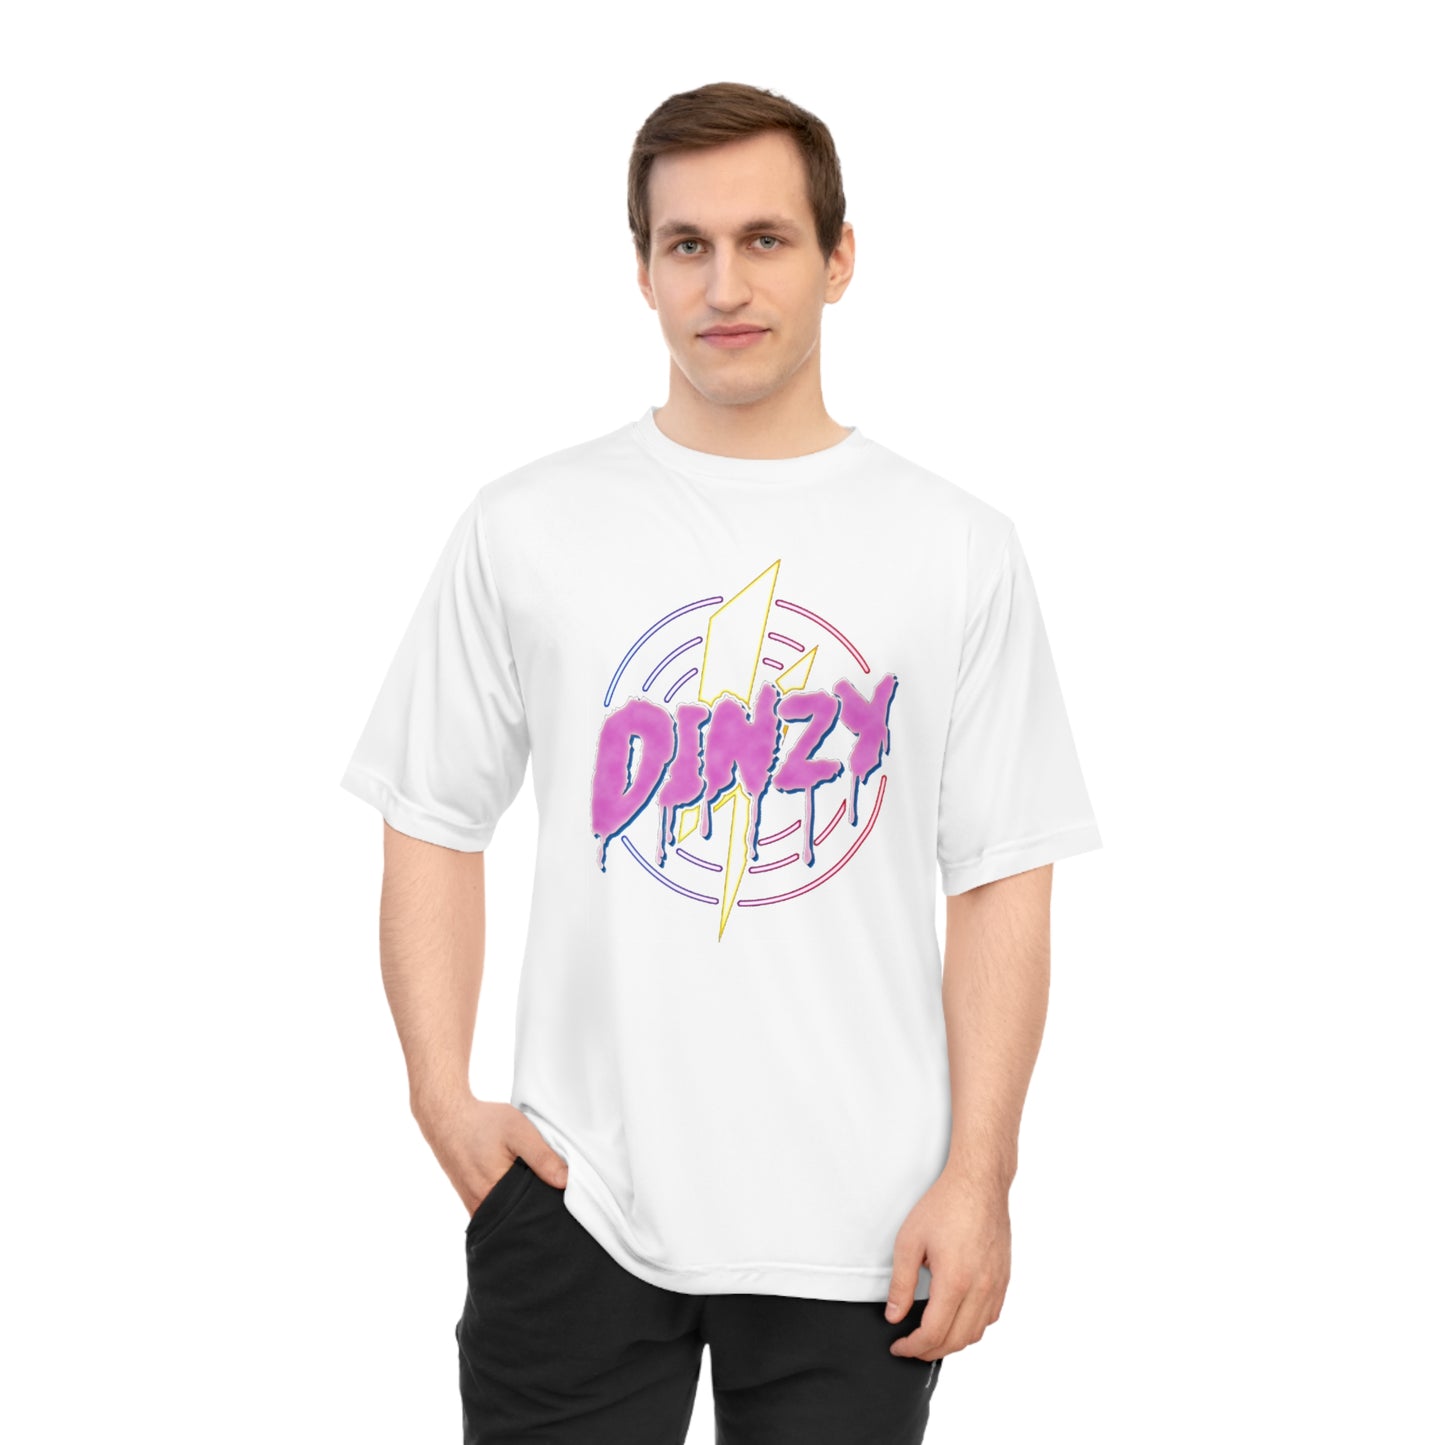 Dinzy Zone Performance T-shirt